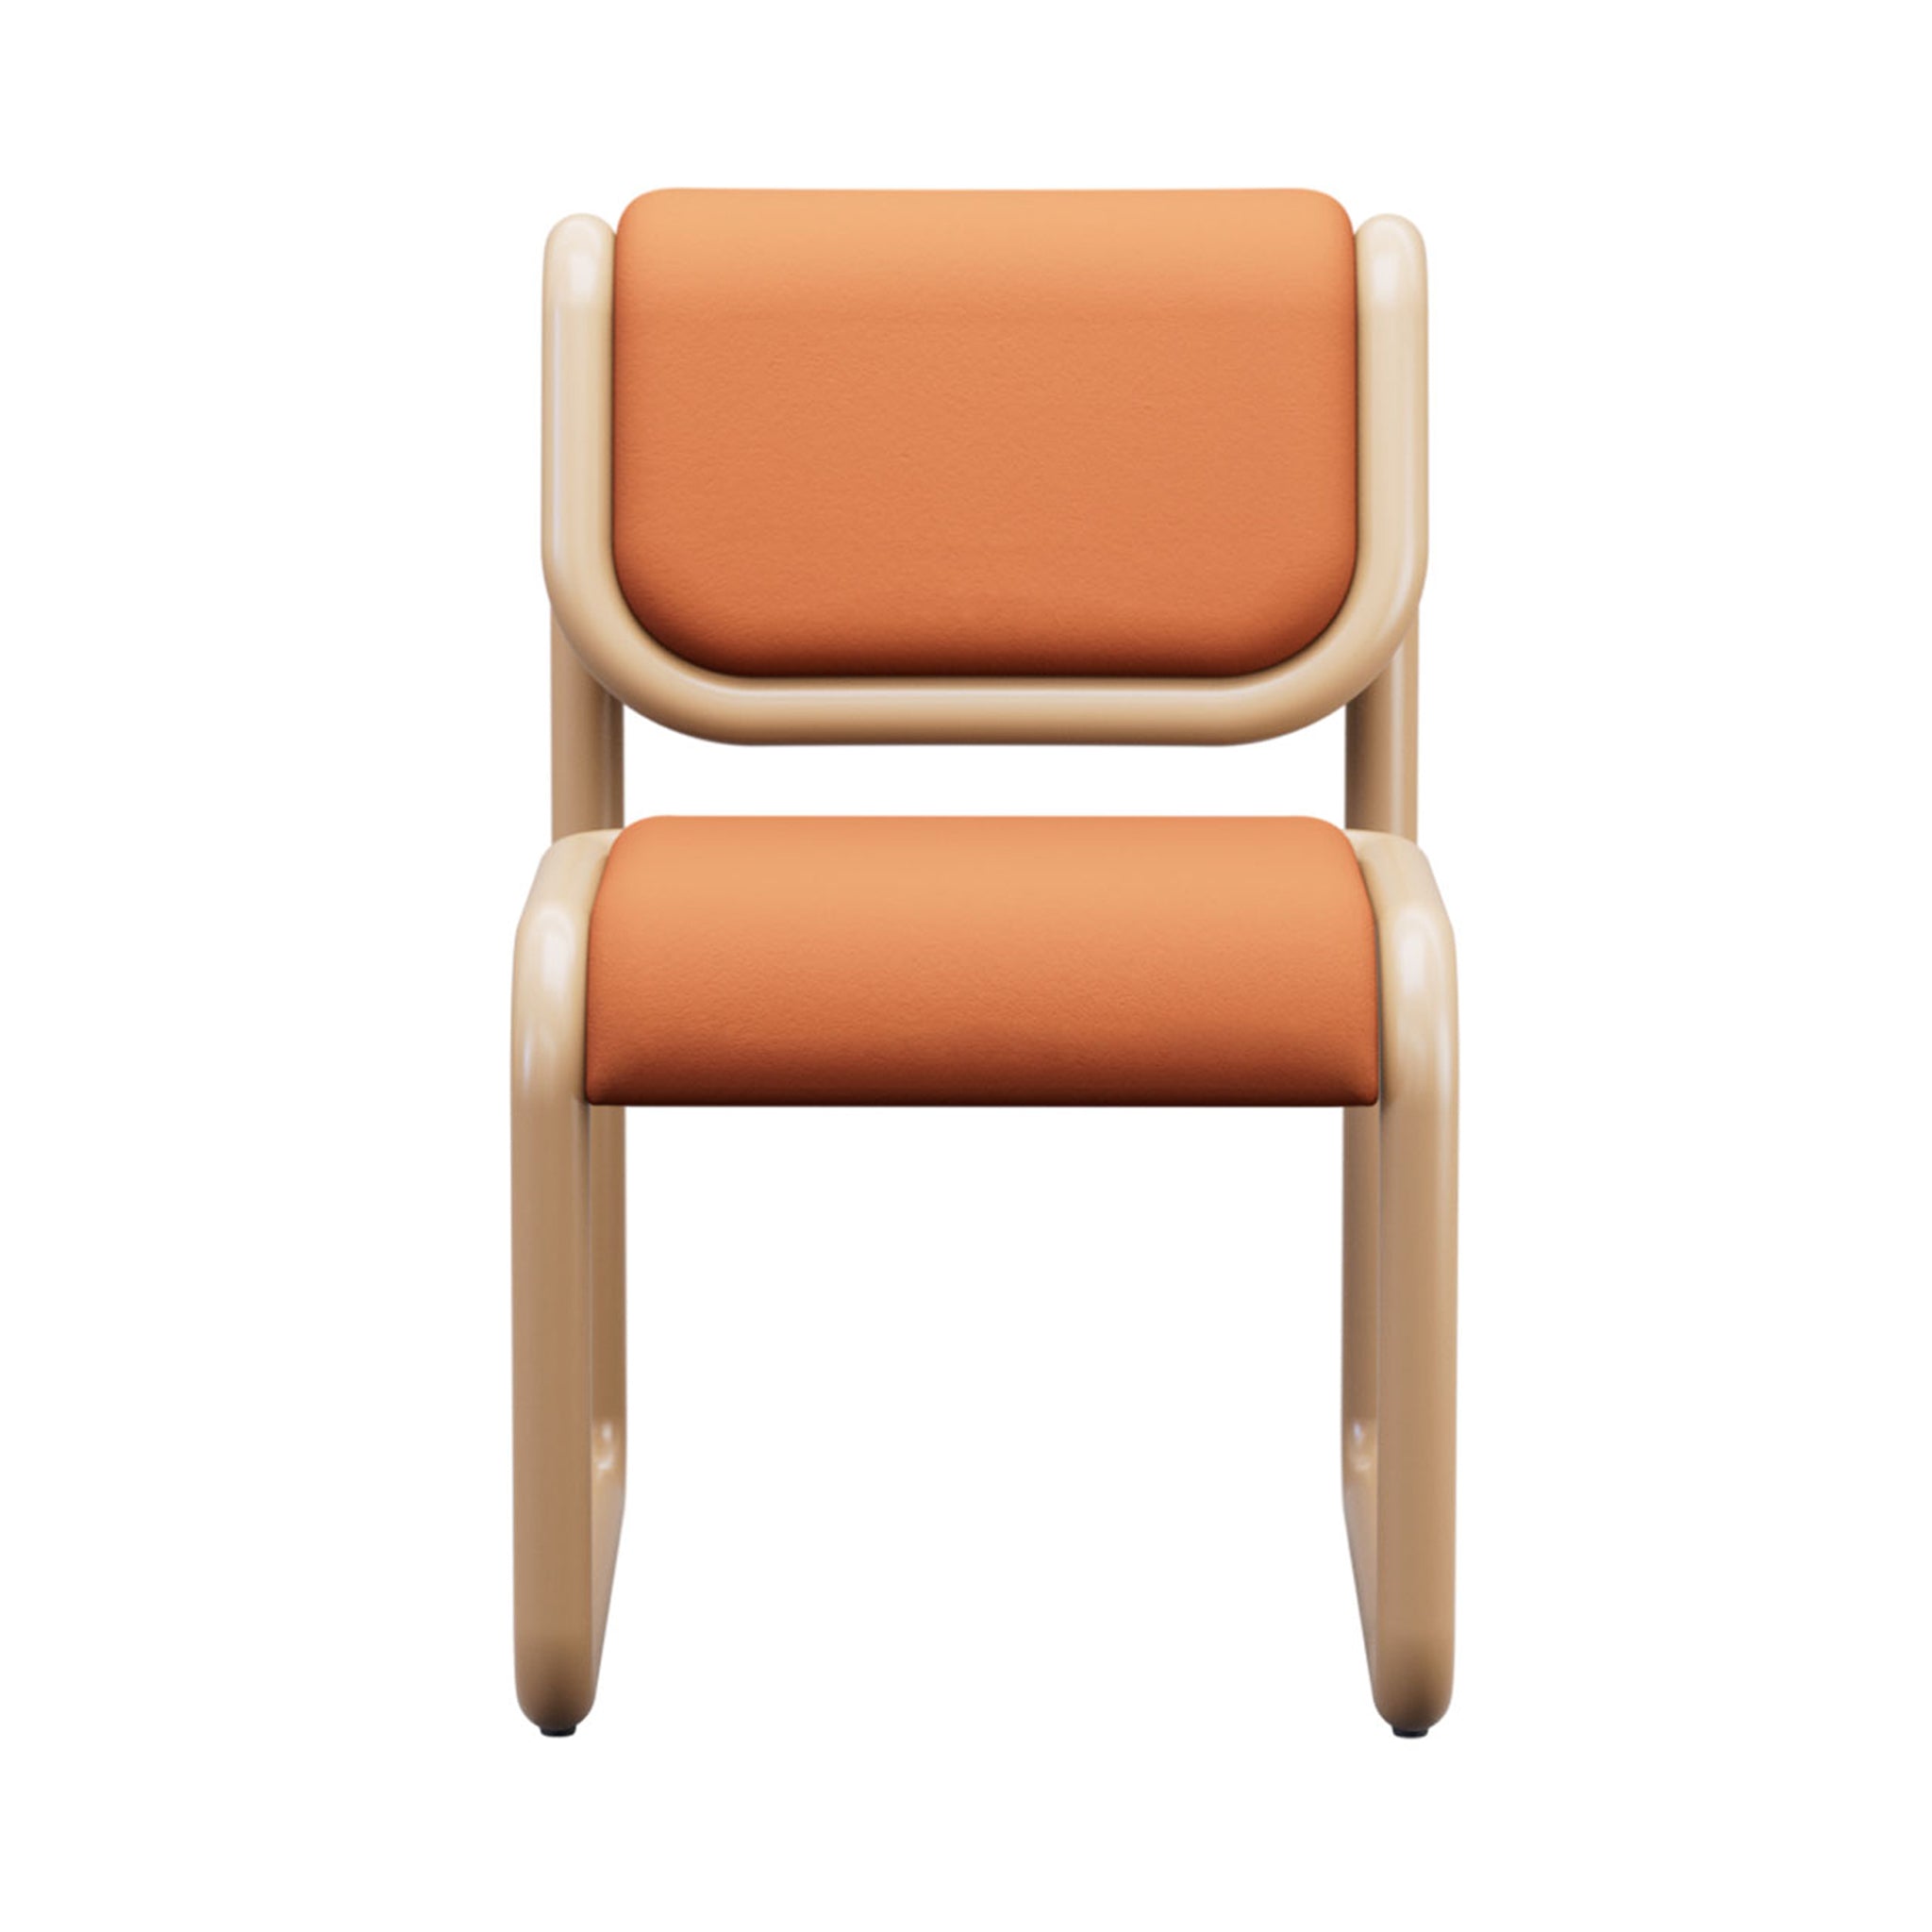 Tube Chair: Upholstered + Tan + Vegan Leather Tan